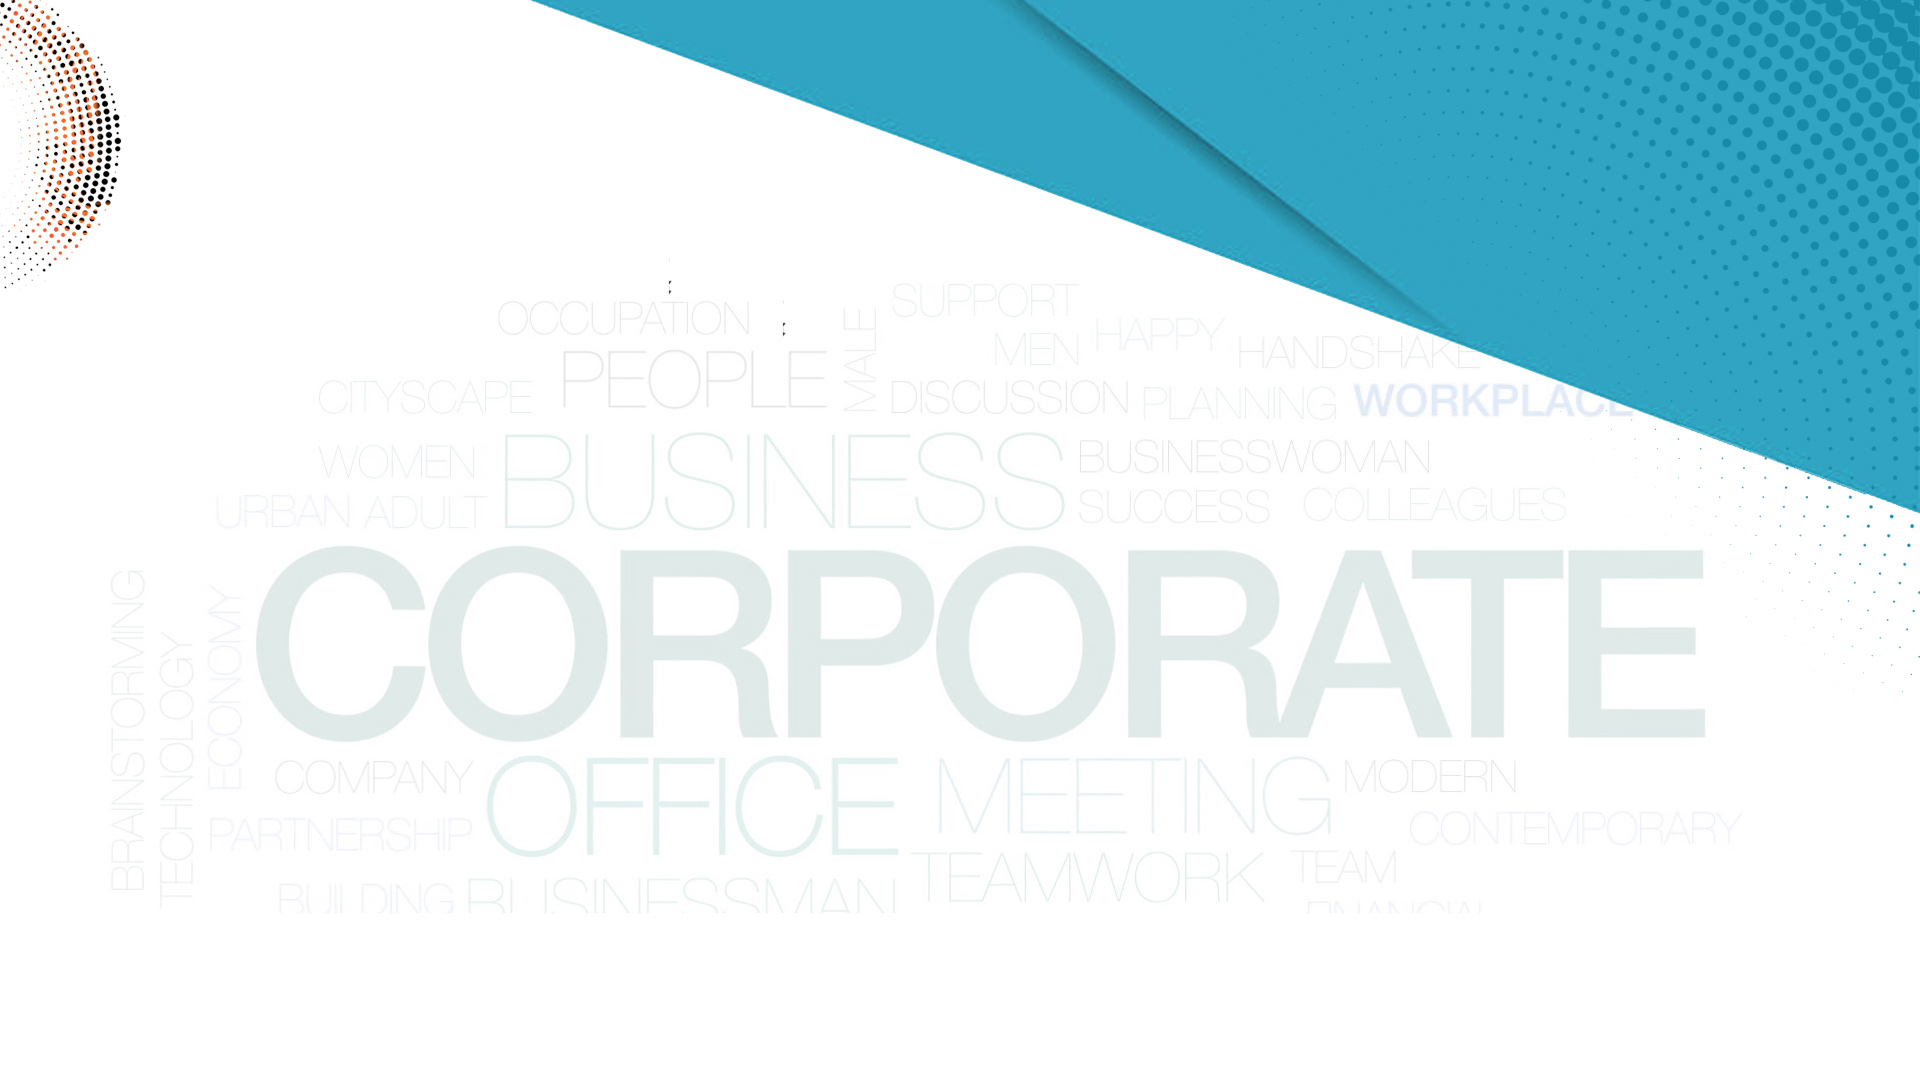 Inspimate Enterprises - Startup, Corporate, Business Branding, Logo, Web Design, Online Social Media Marketing Kenya